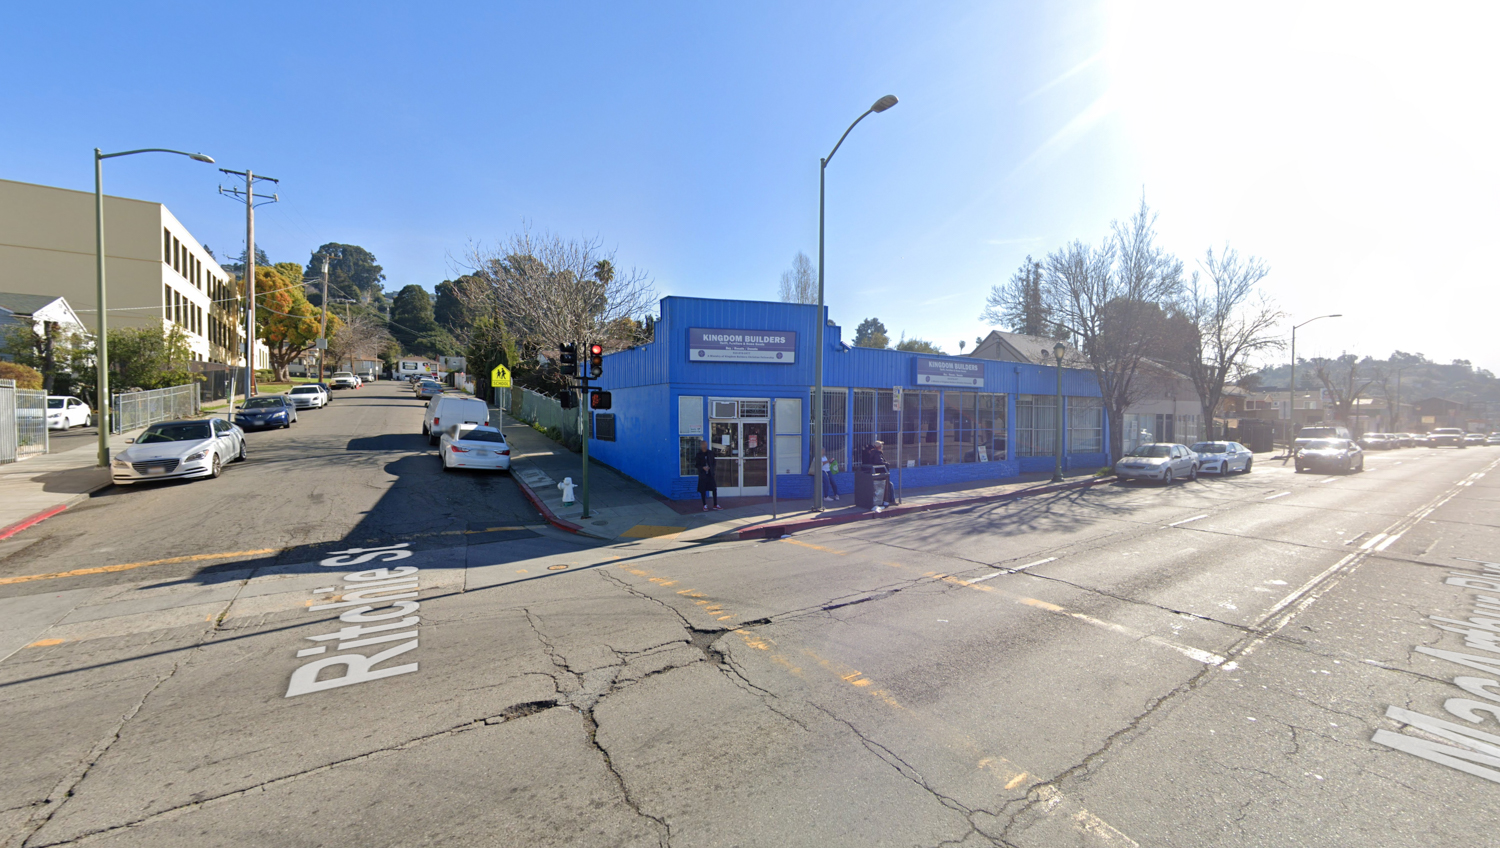 7954 MacArthur Boulevard, image via Google Street View